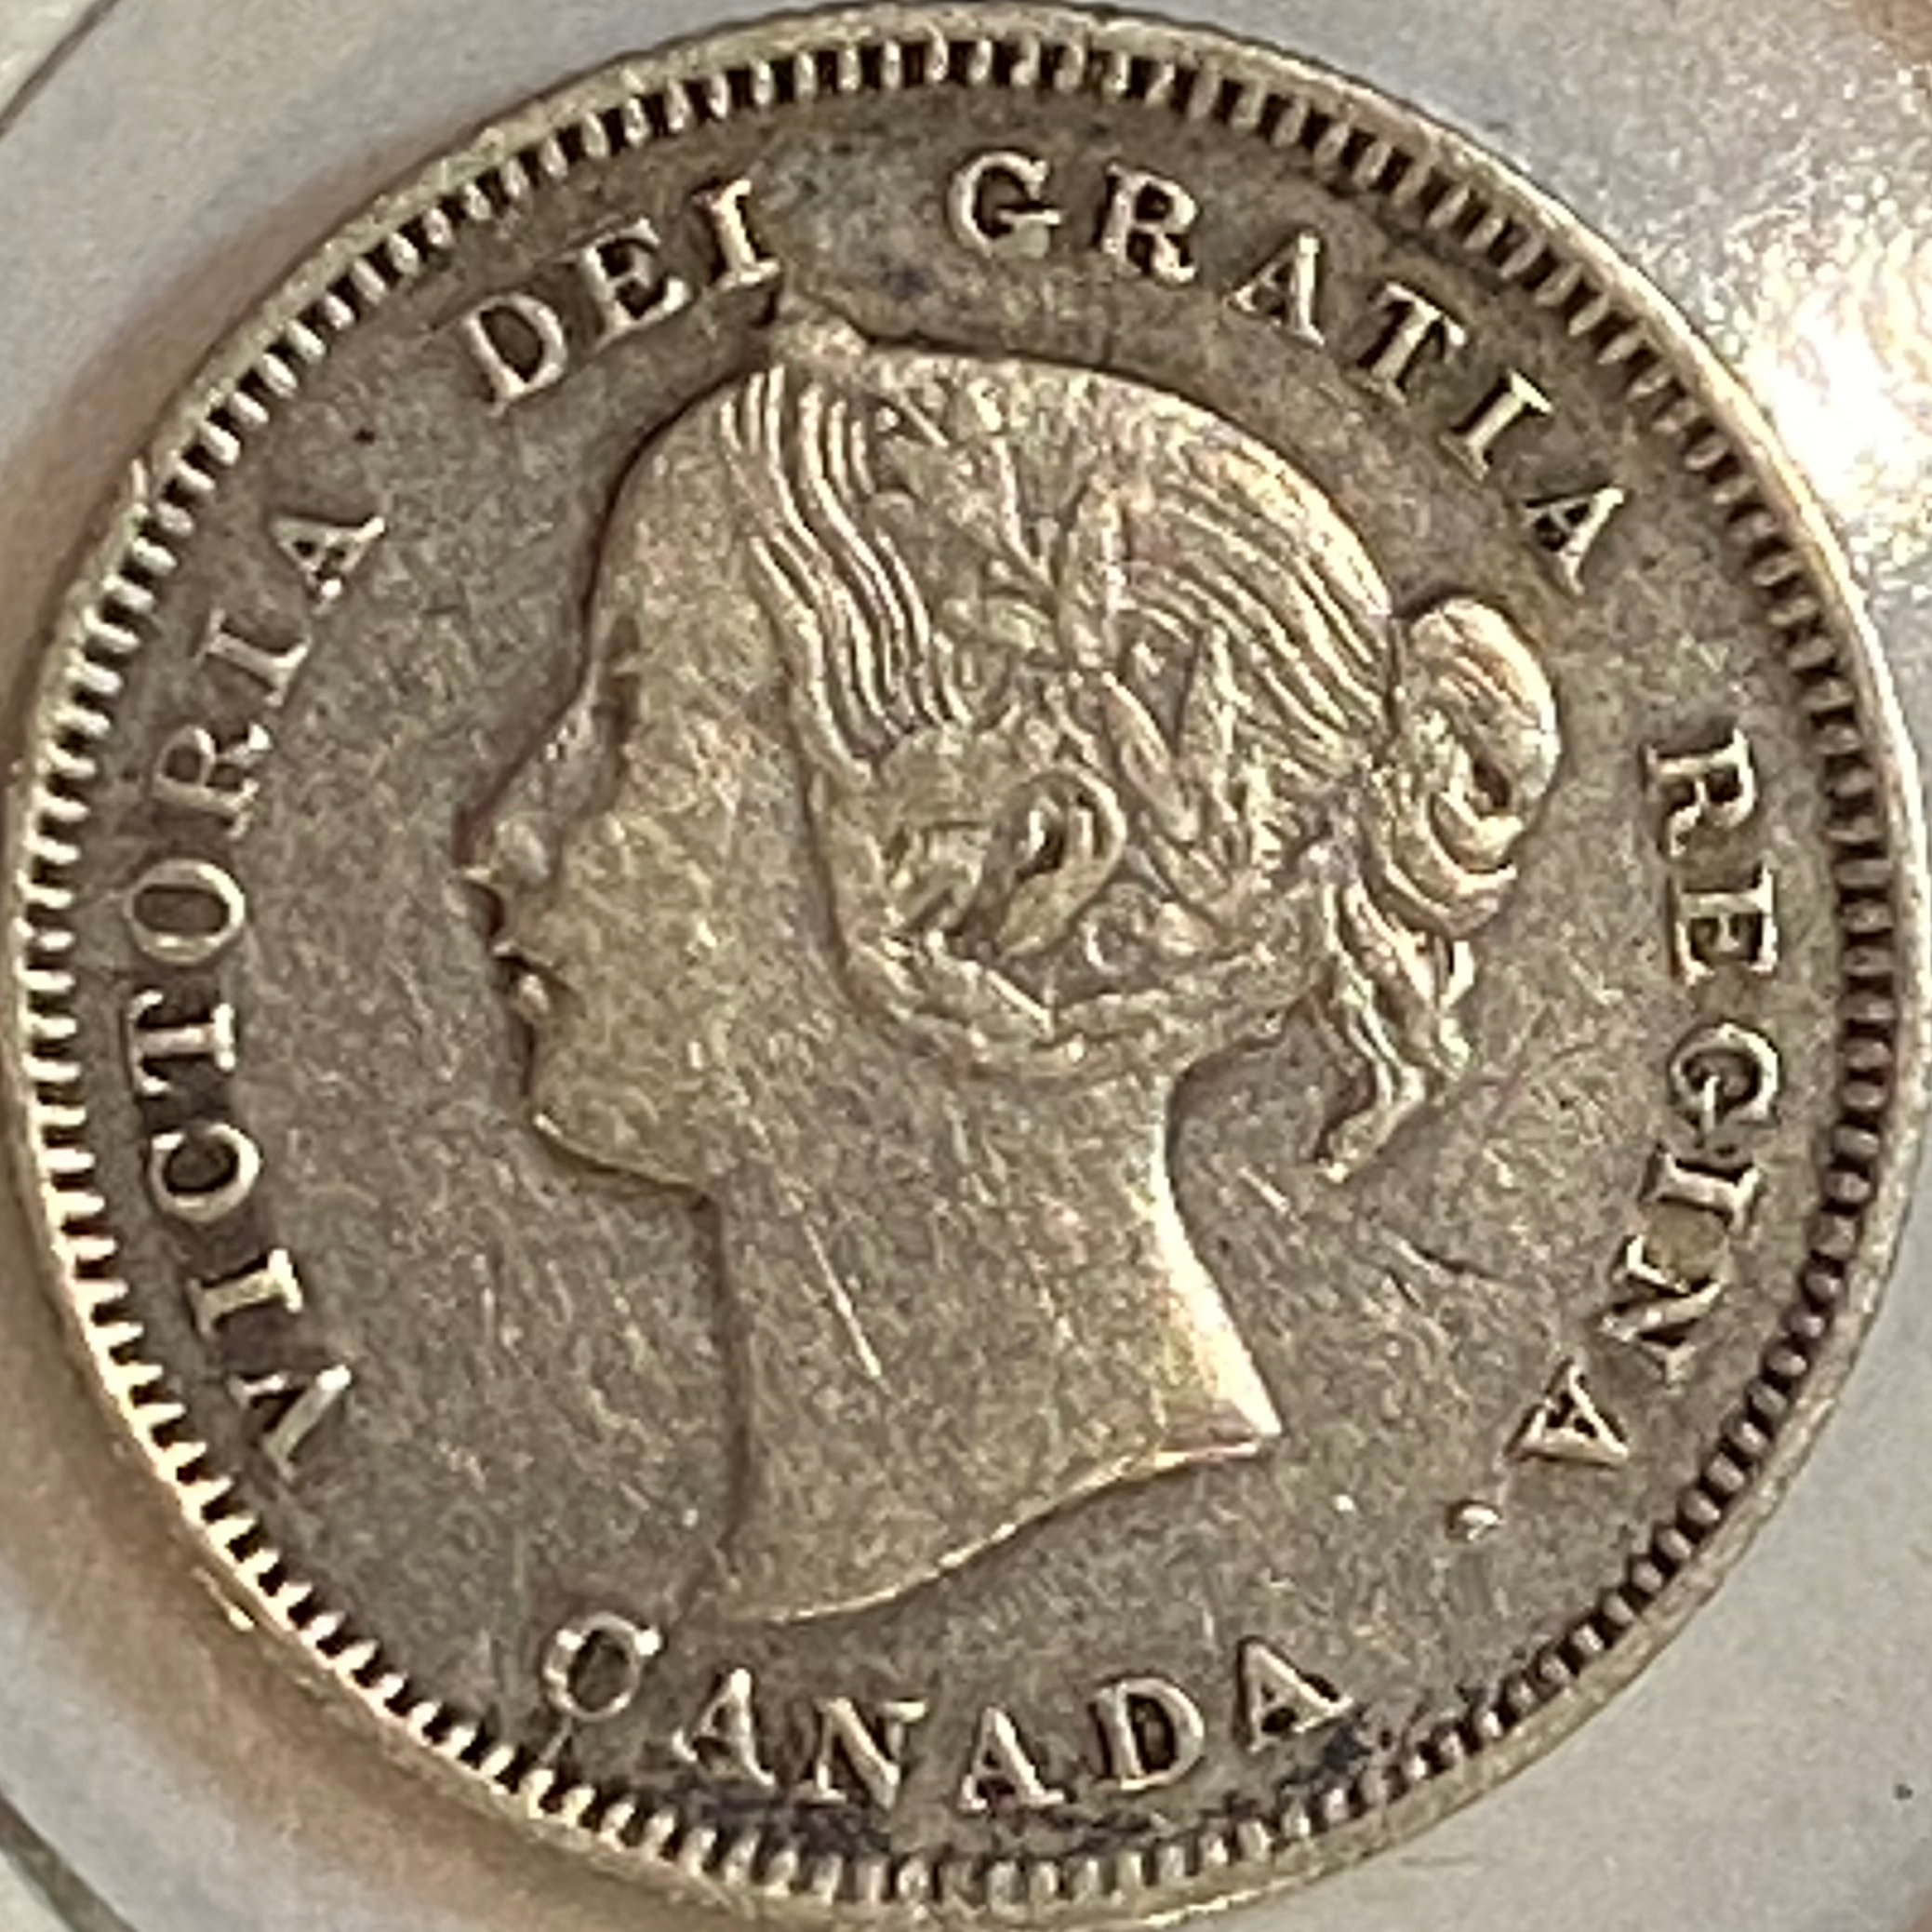 5-1901-1a.JPG